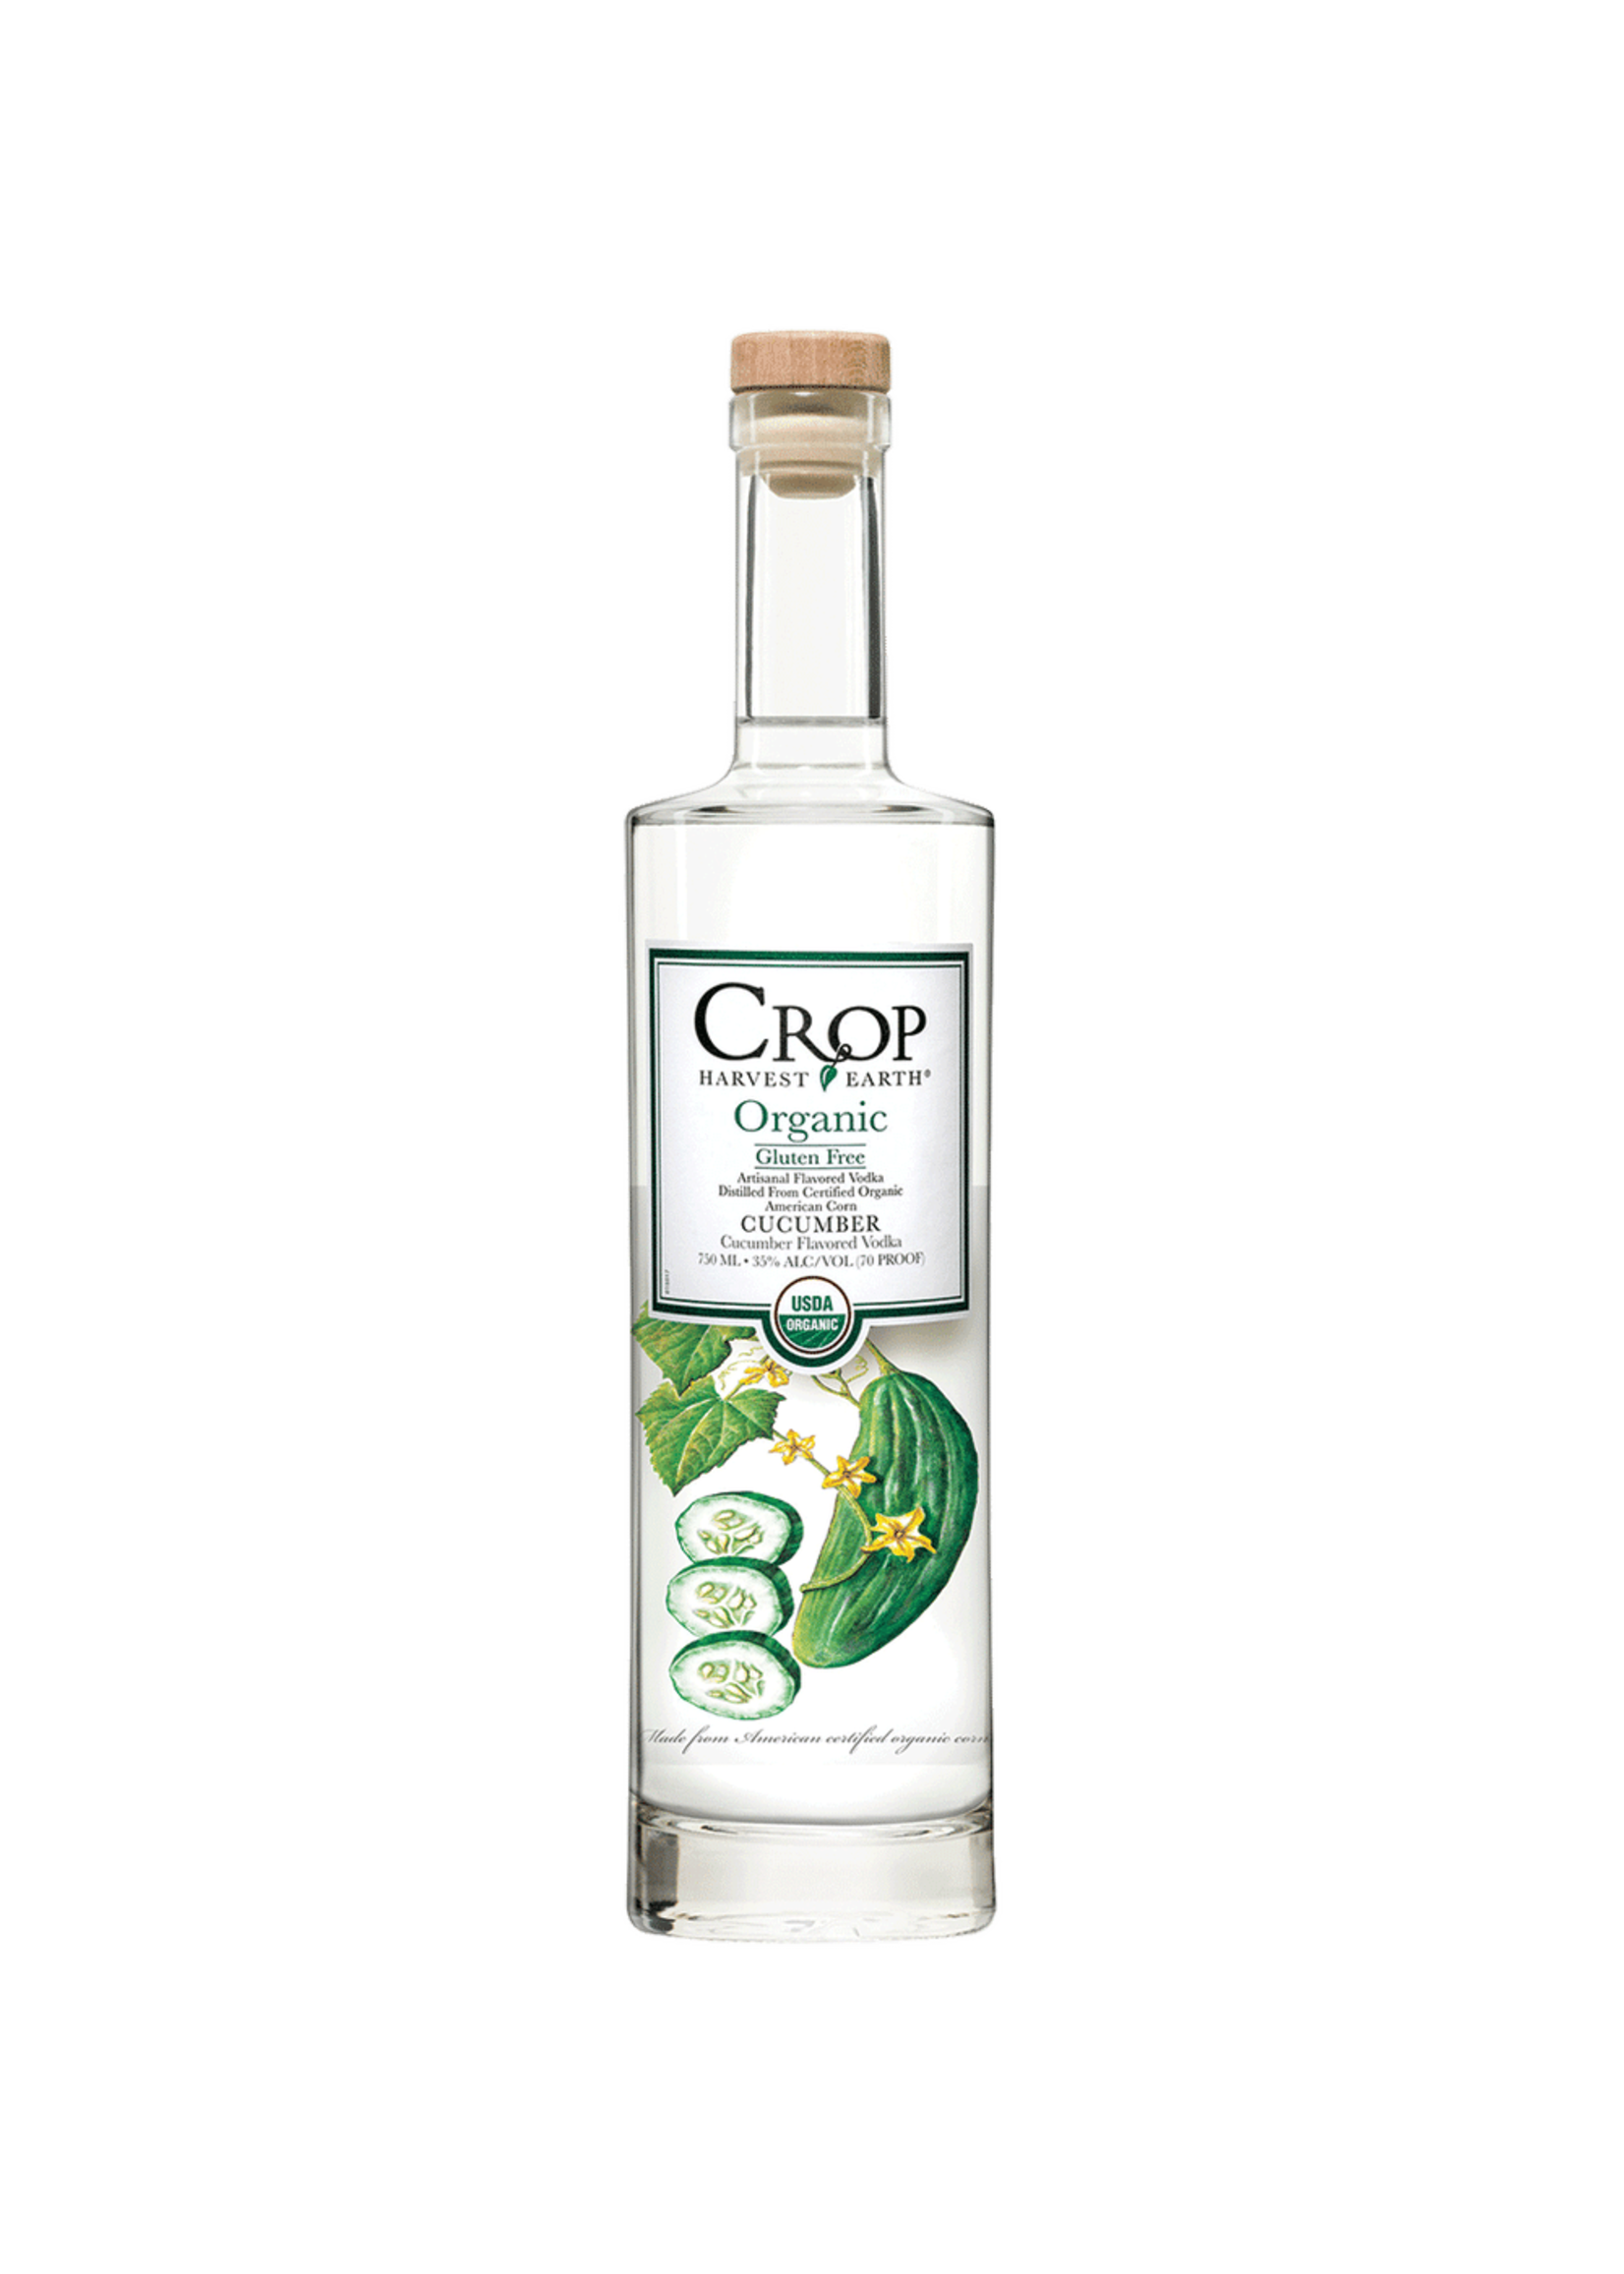 Crop Organic Vodka Cucumber 70Proof 750ml